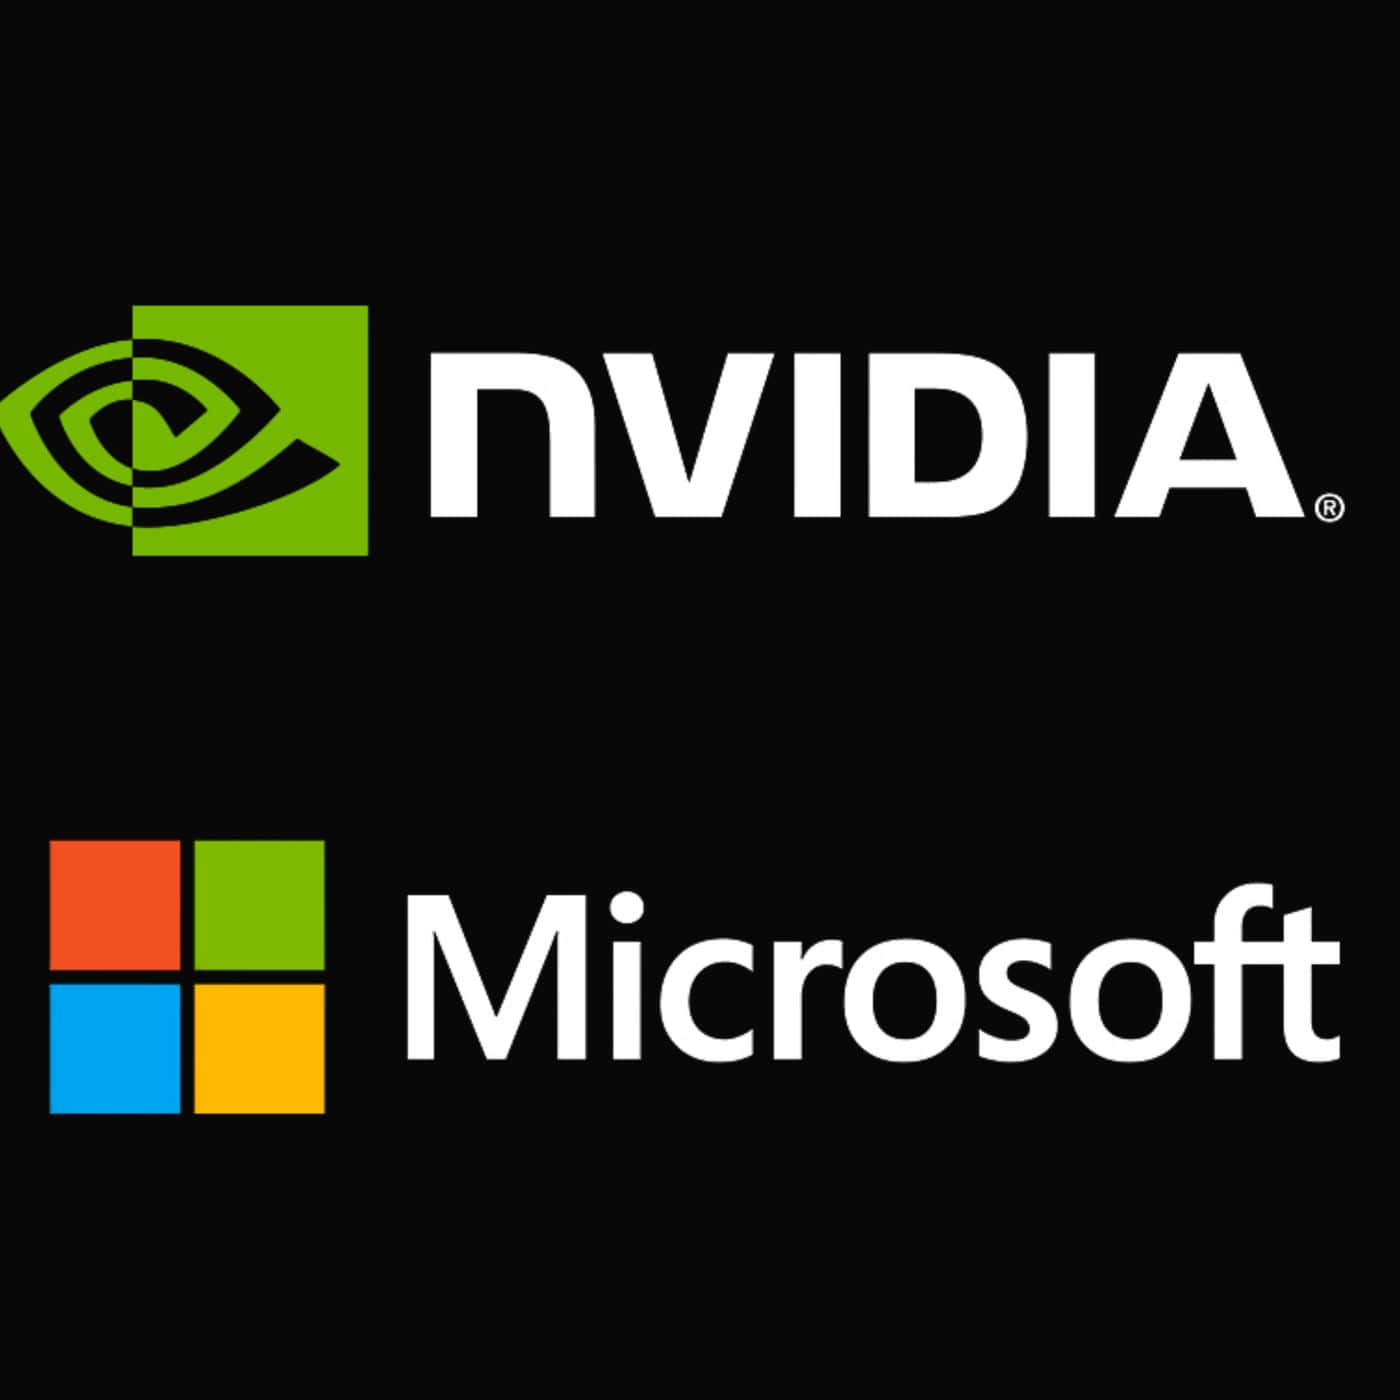 Logosde Nvidia Y Microsoft Sobre Un Fondo Negro.